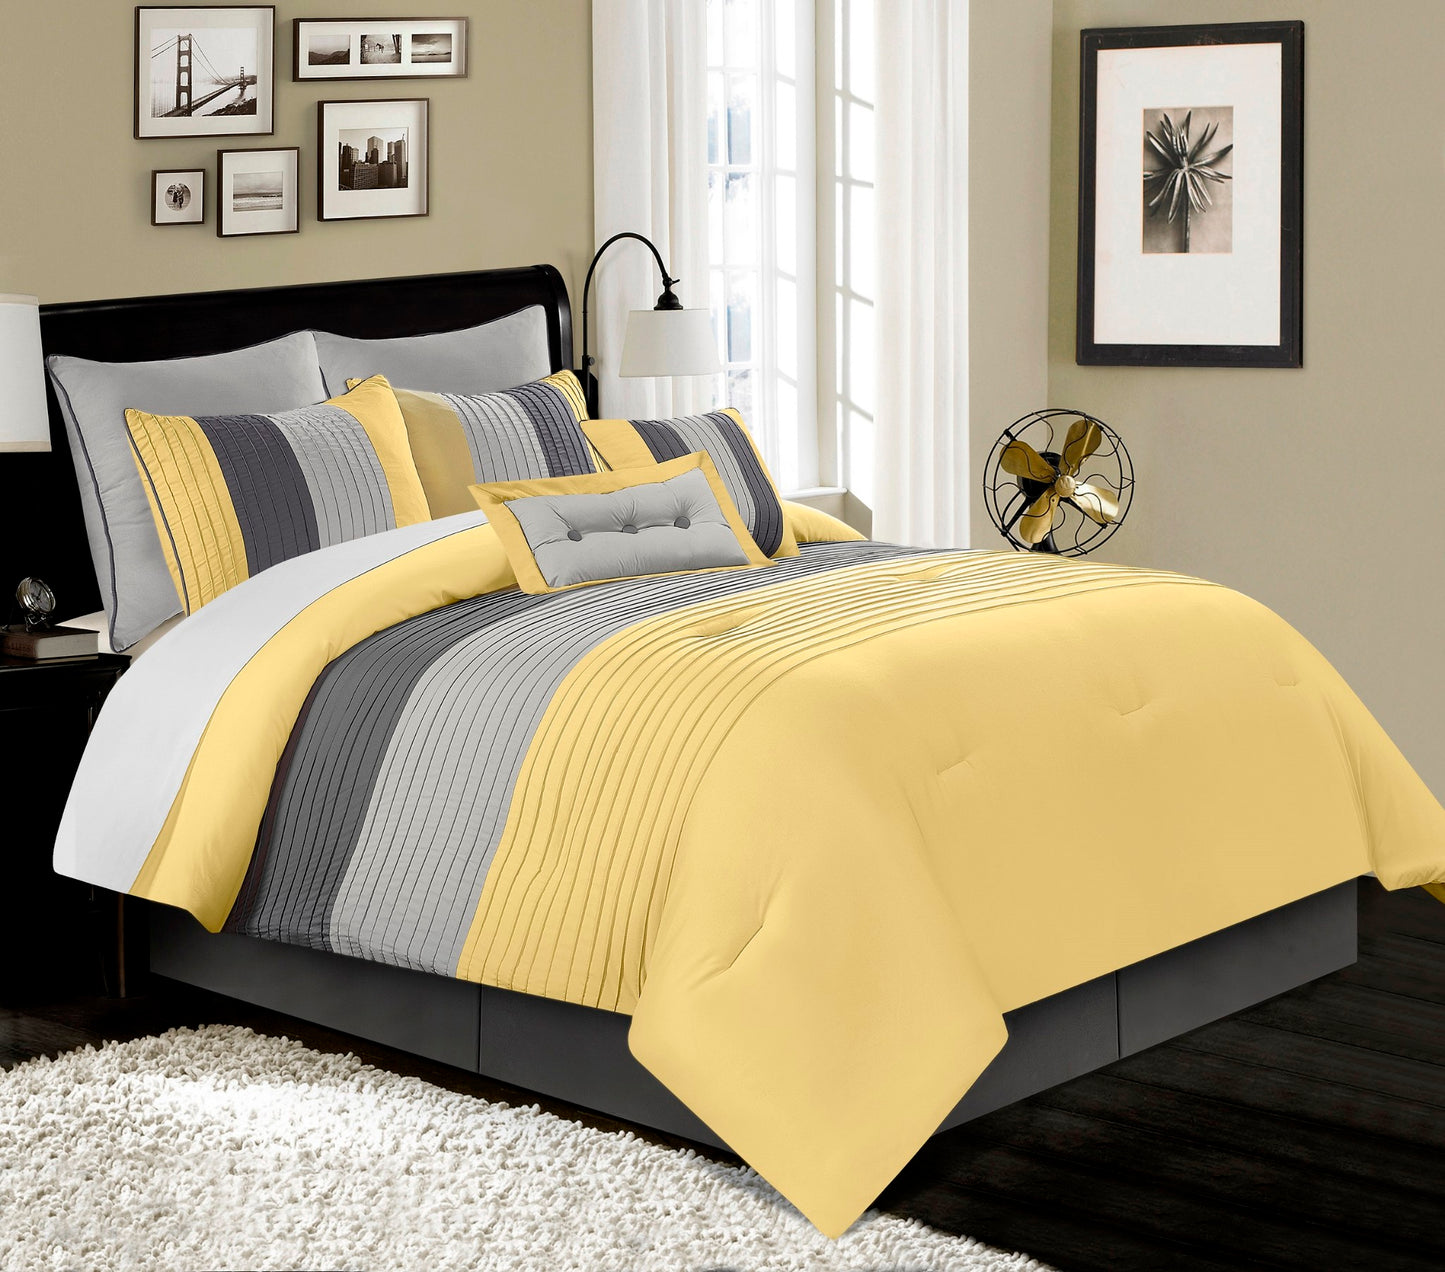 Loft 8-Piece Luxury Striped Pleated Comforter Set